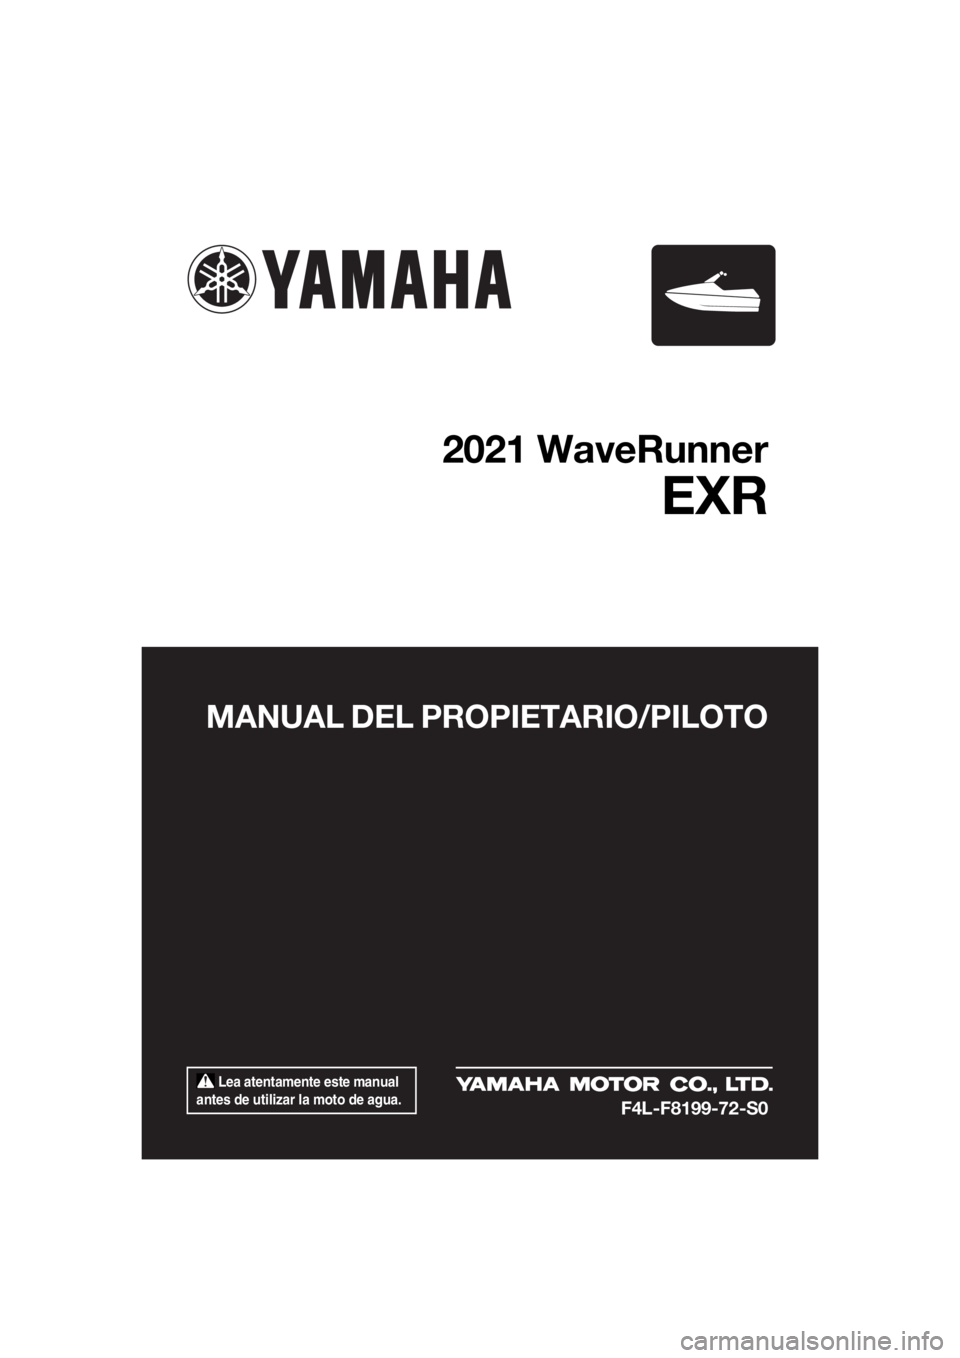 YAMAHA EXR 2021  Manuale de Empleo (in Spanish) 